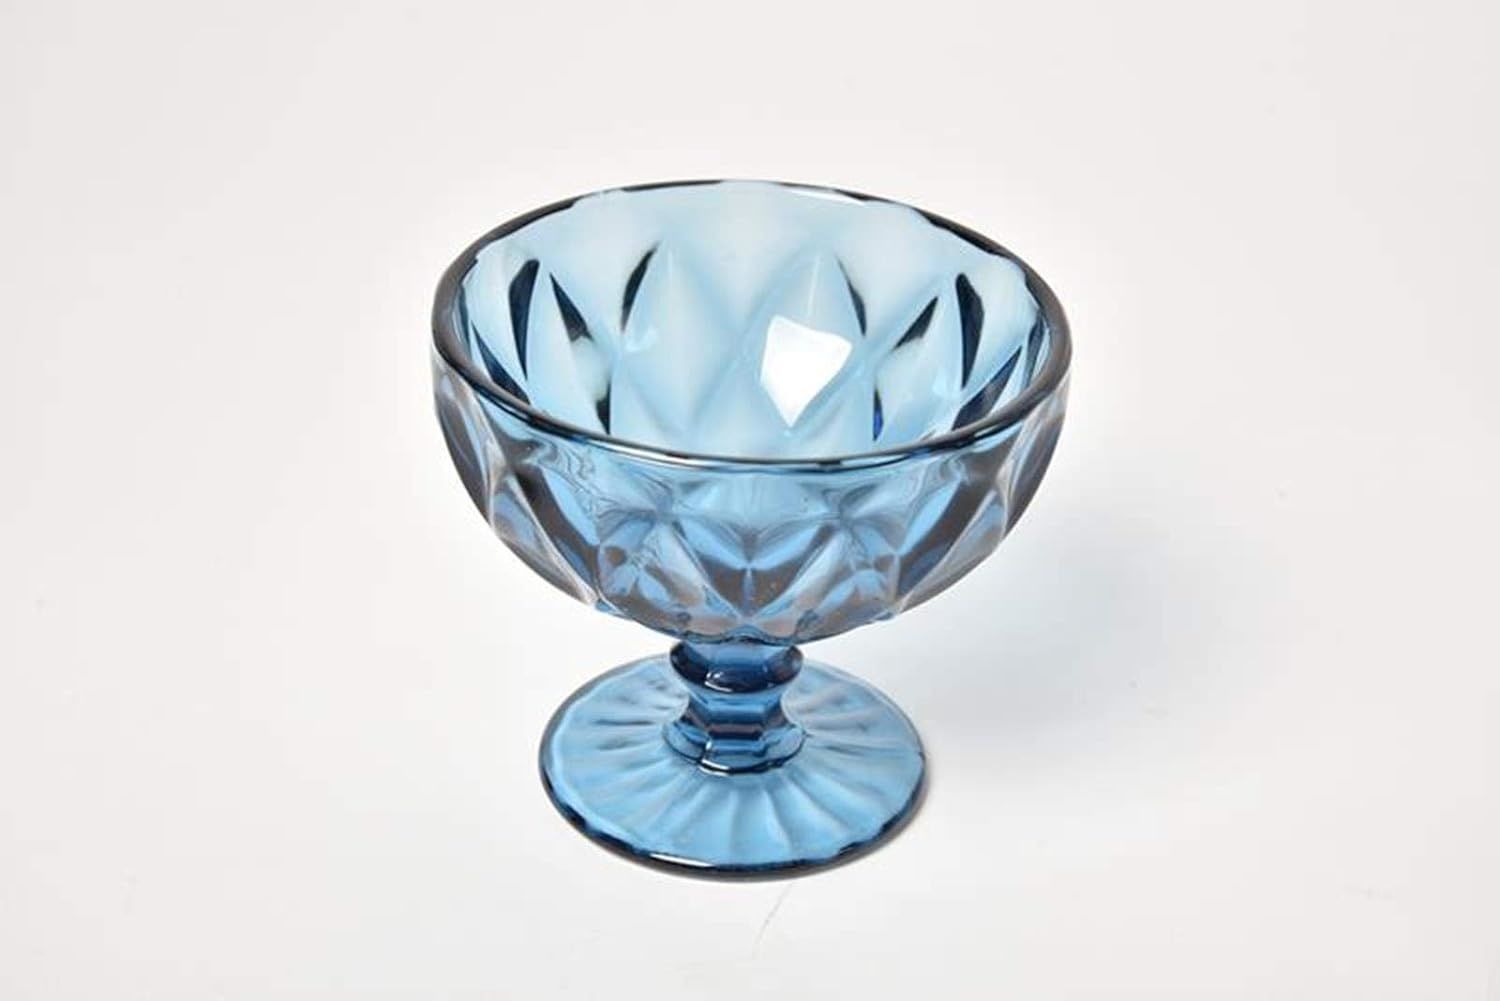 Seta Crystal Colors 6 Pcs Footed Bowl Drop Pattern Blue